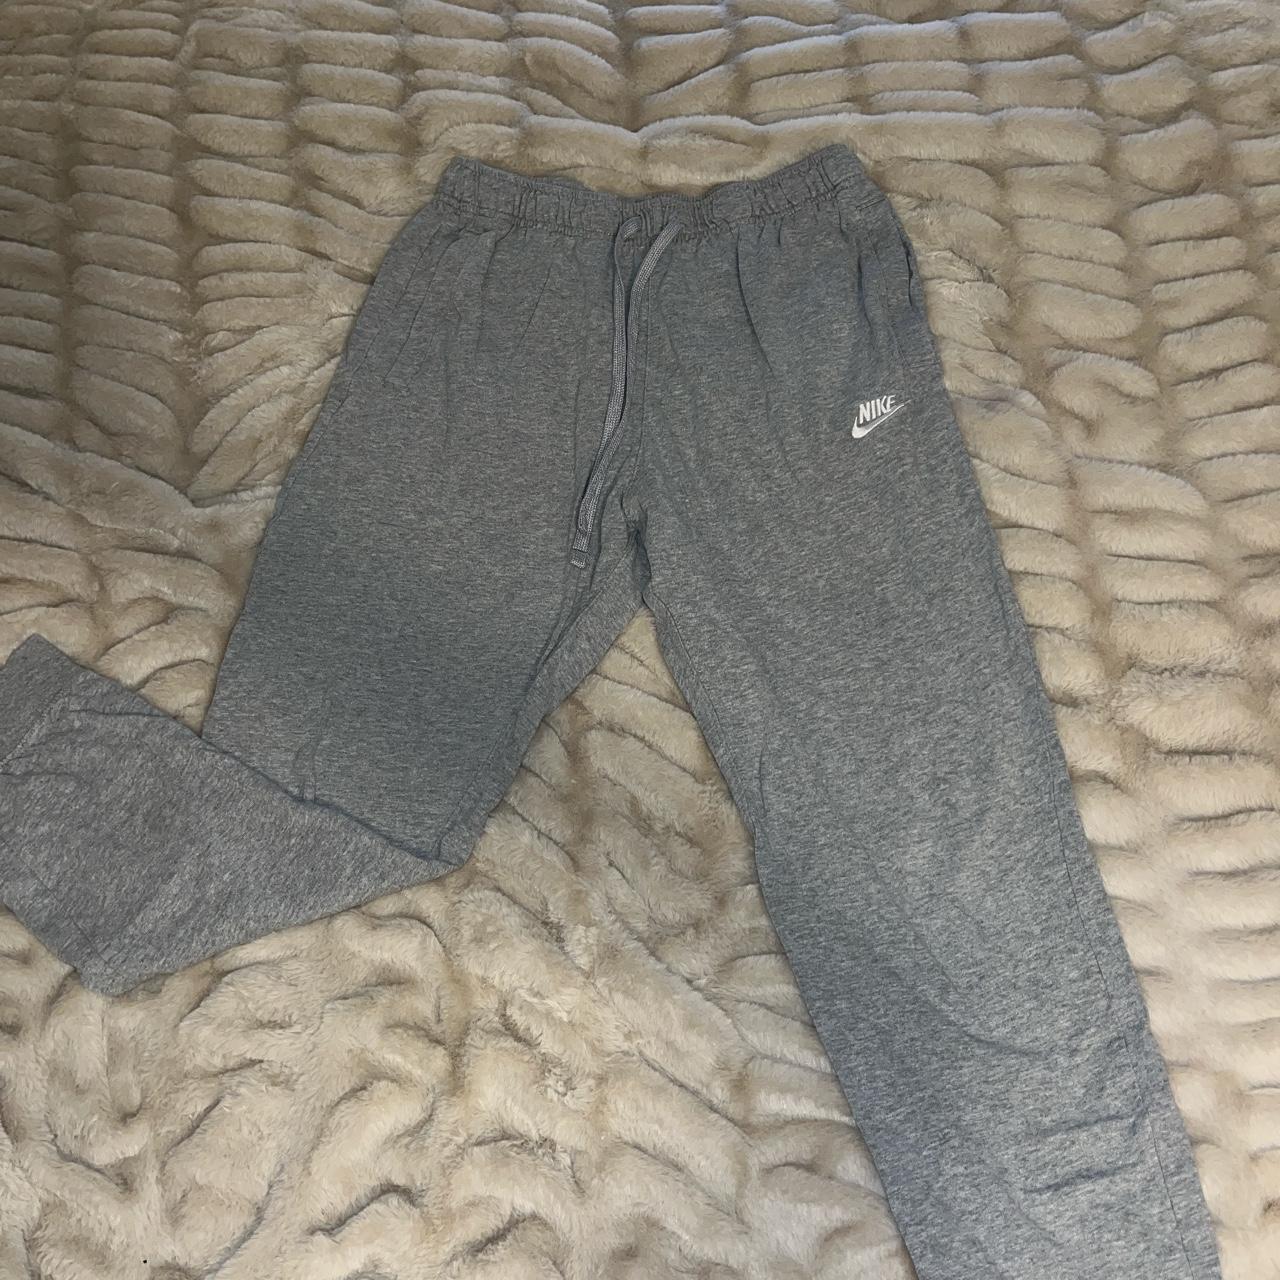 Size small grey Nike sweatpants - Depop